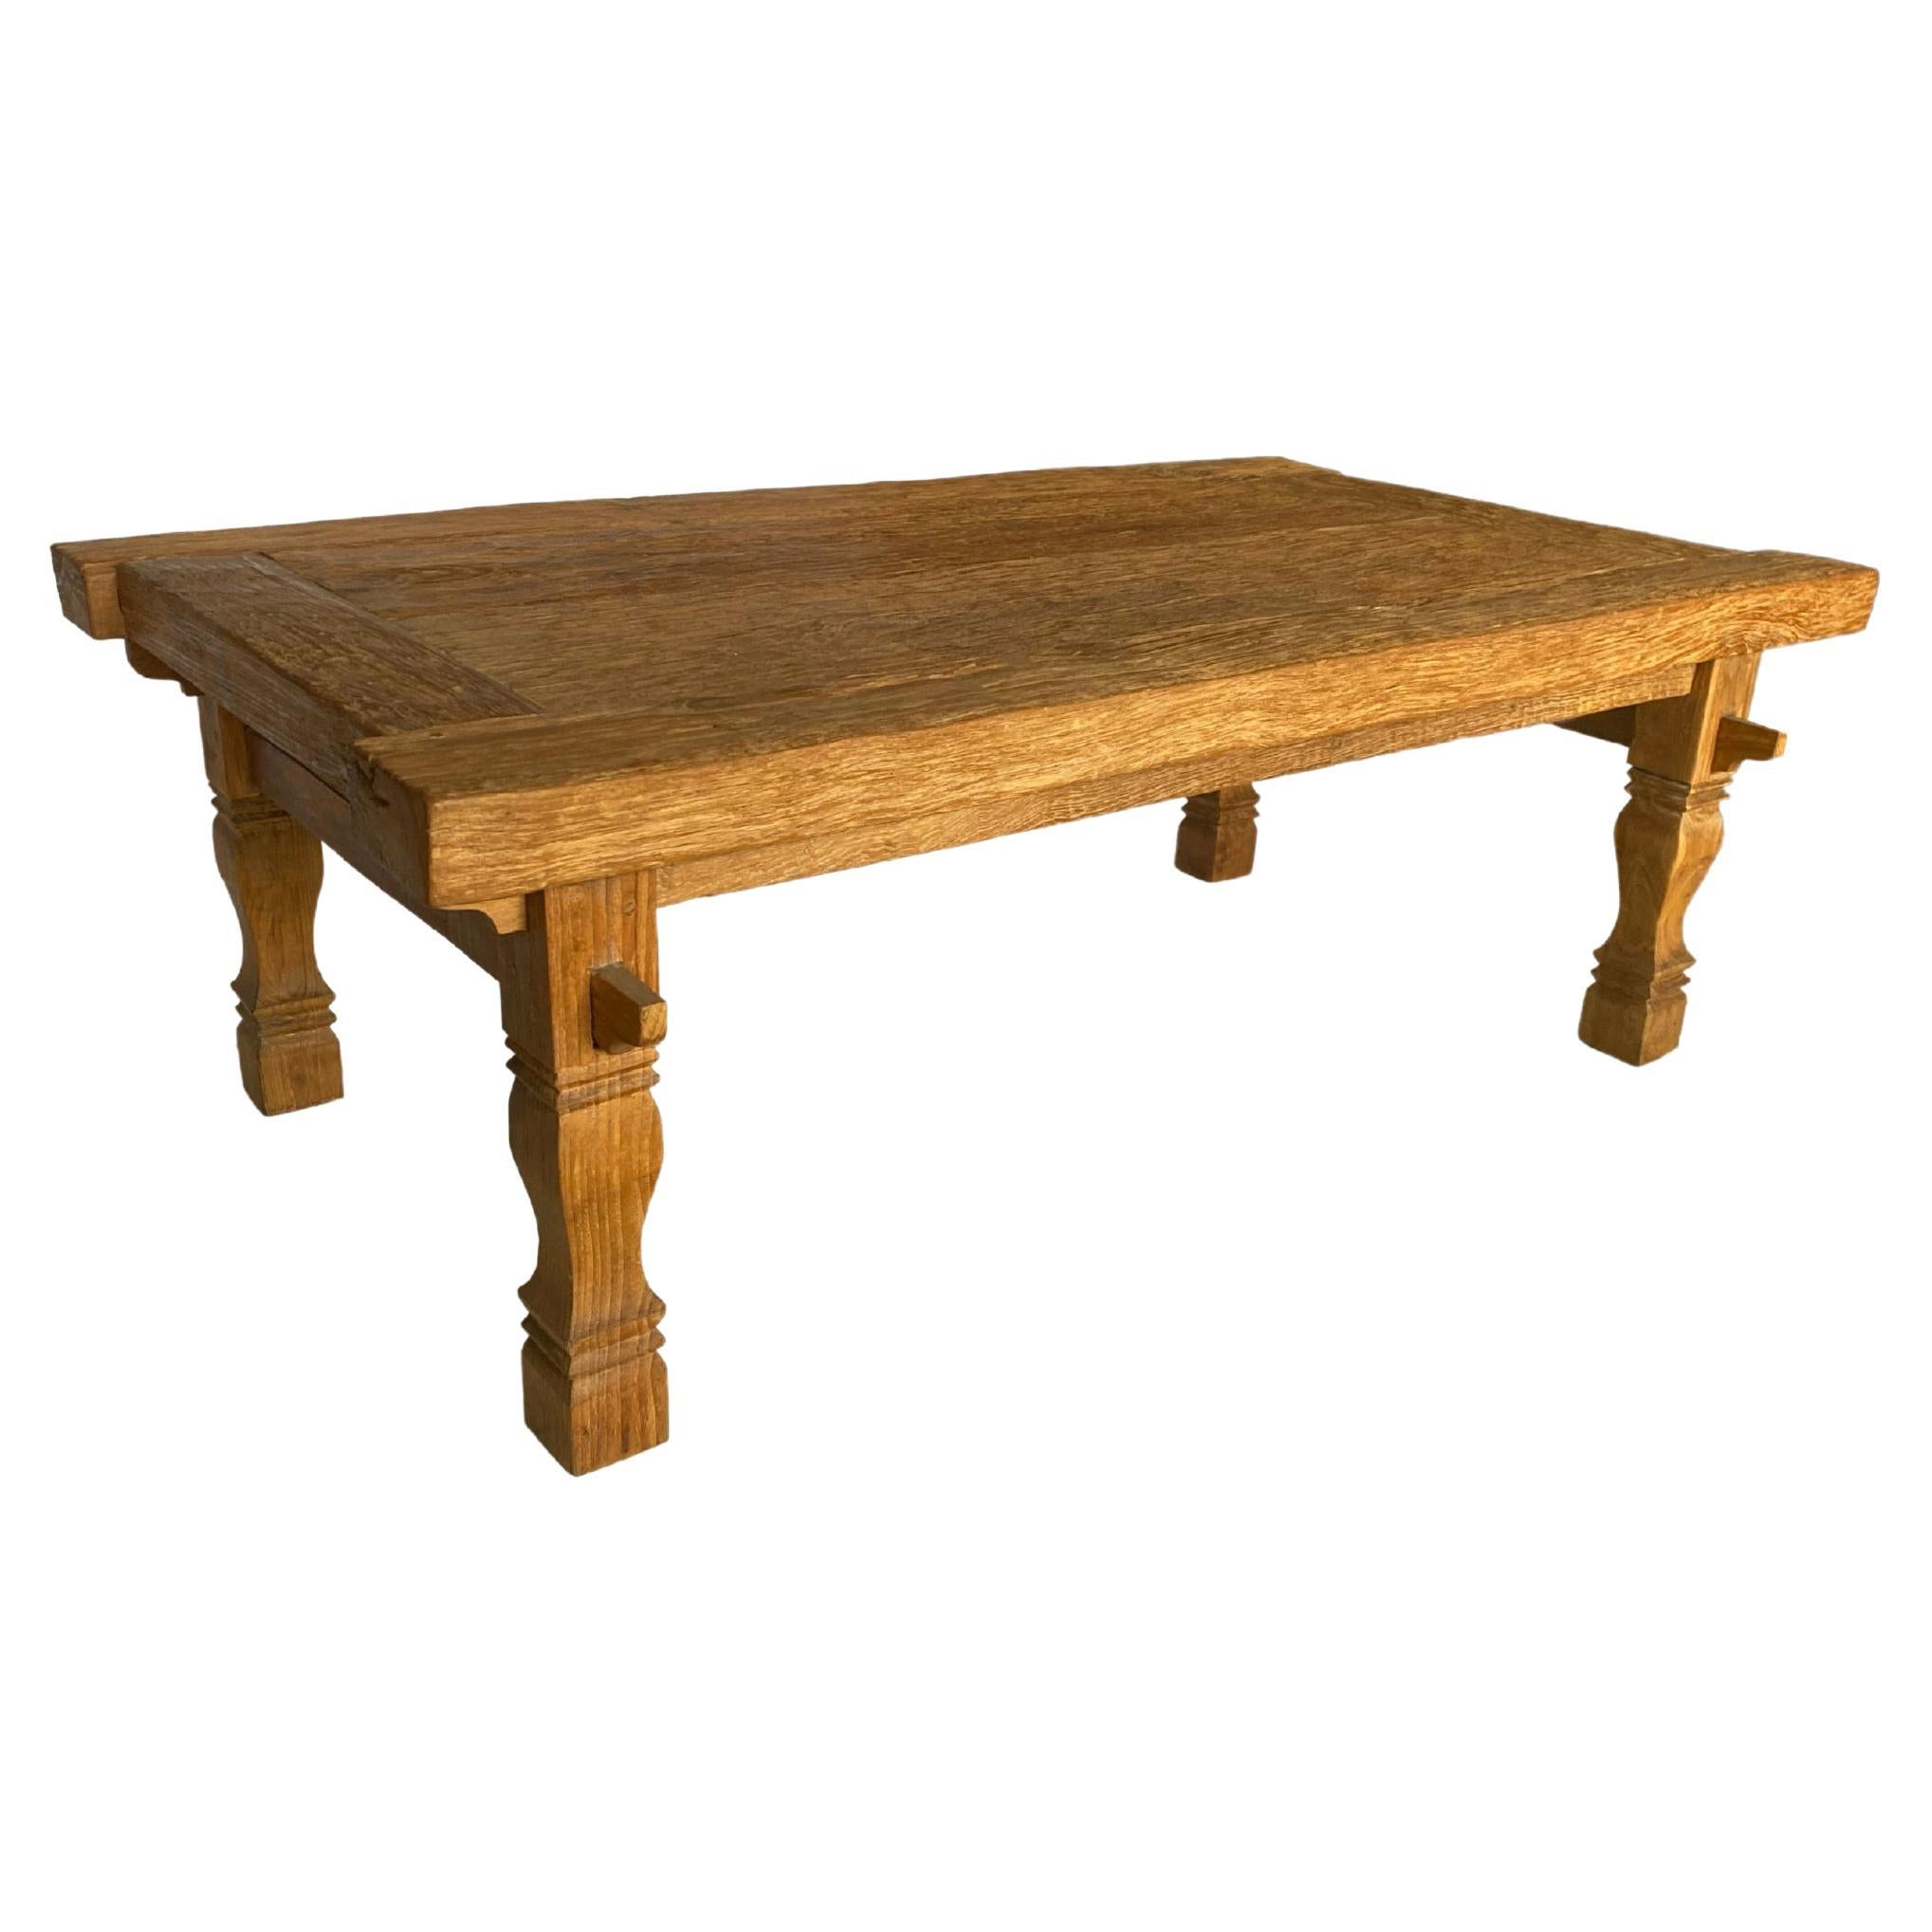 Organic Teak Wood Table with Stunning Wood Pattern Detailing